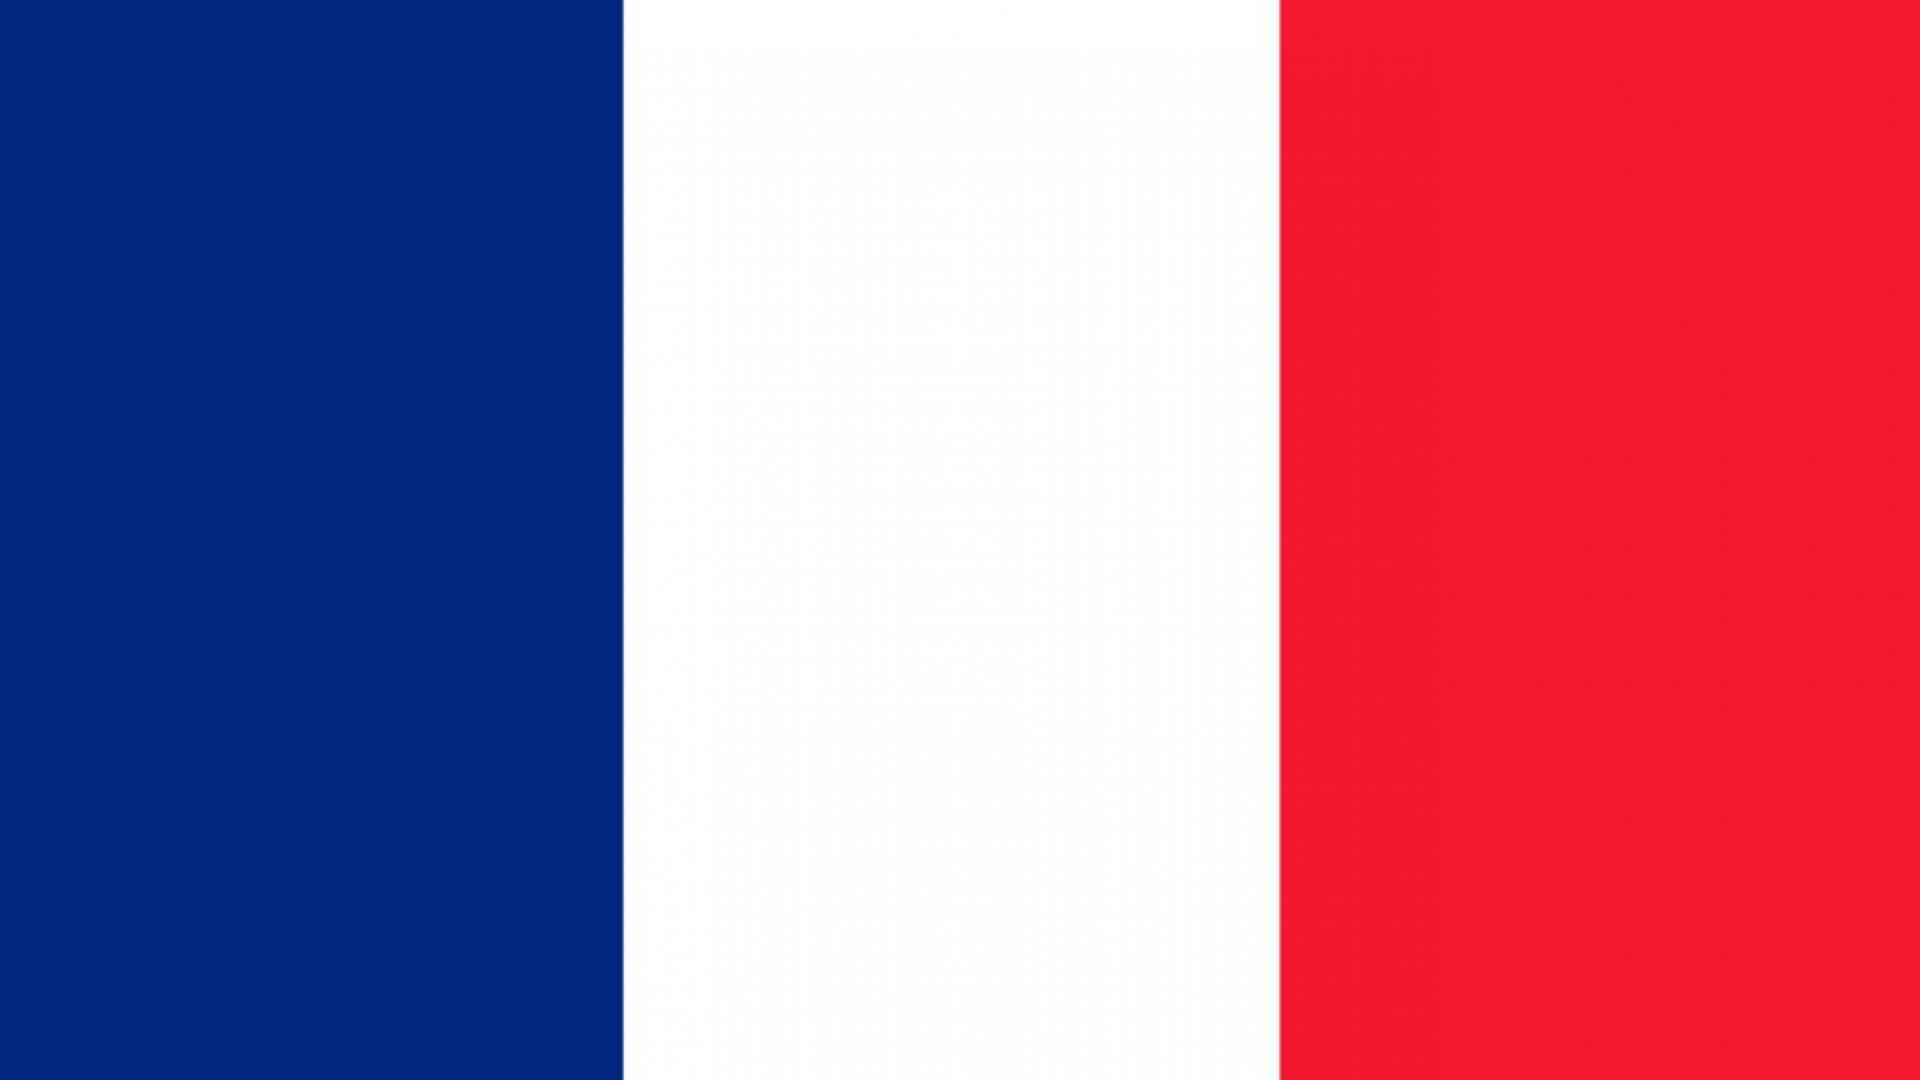 1920 x 1080 · jpeg - France Flag - Wallpaper, High Definition, High Quality, Widescreen